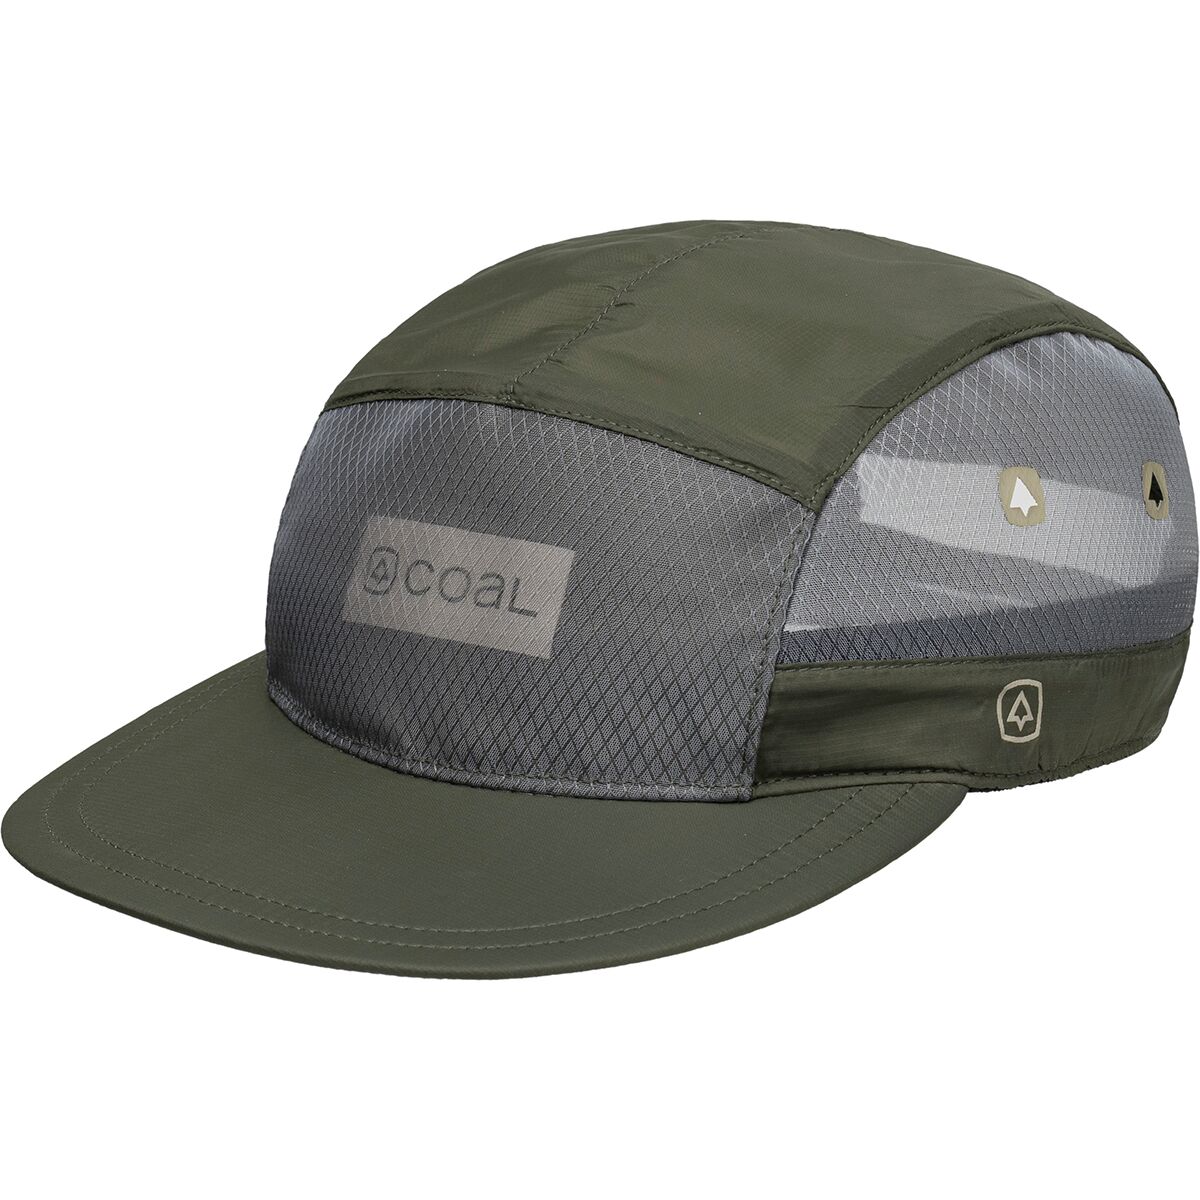 Coal Headwear Apollo Hat